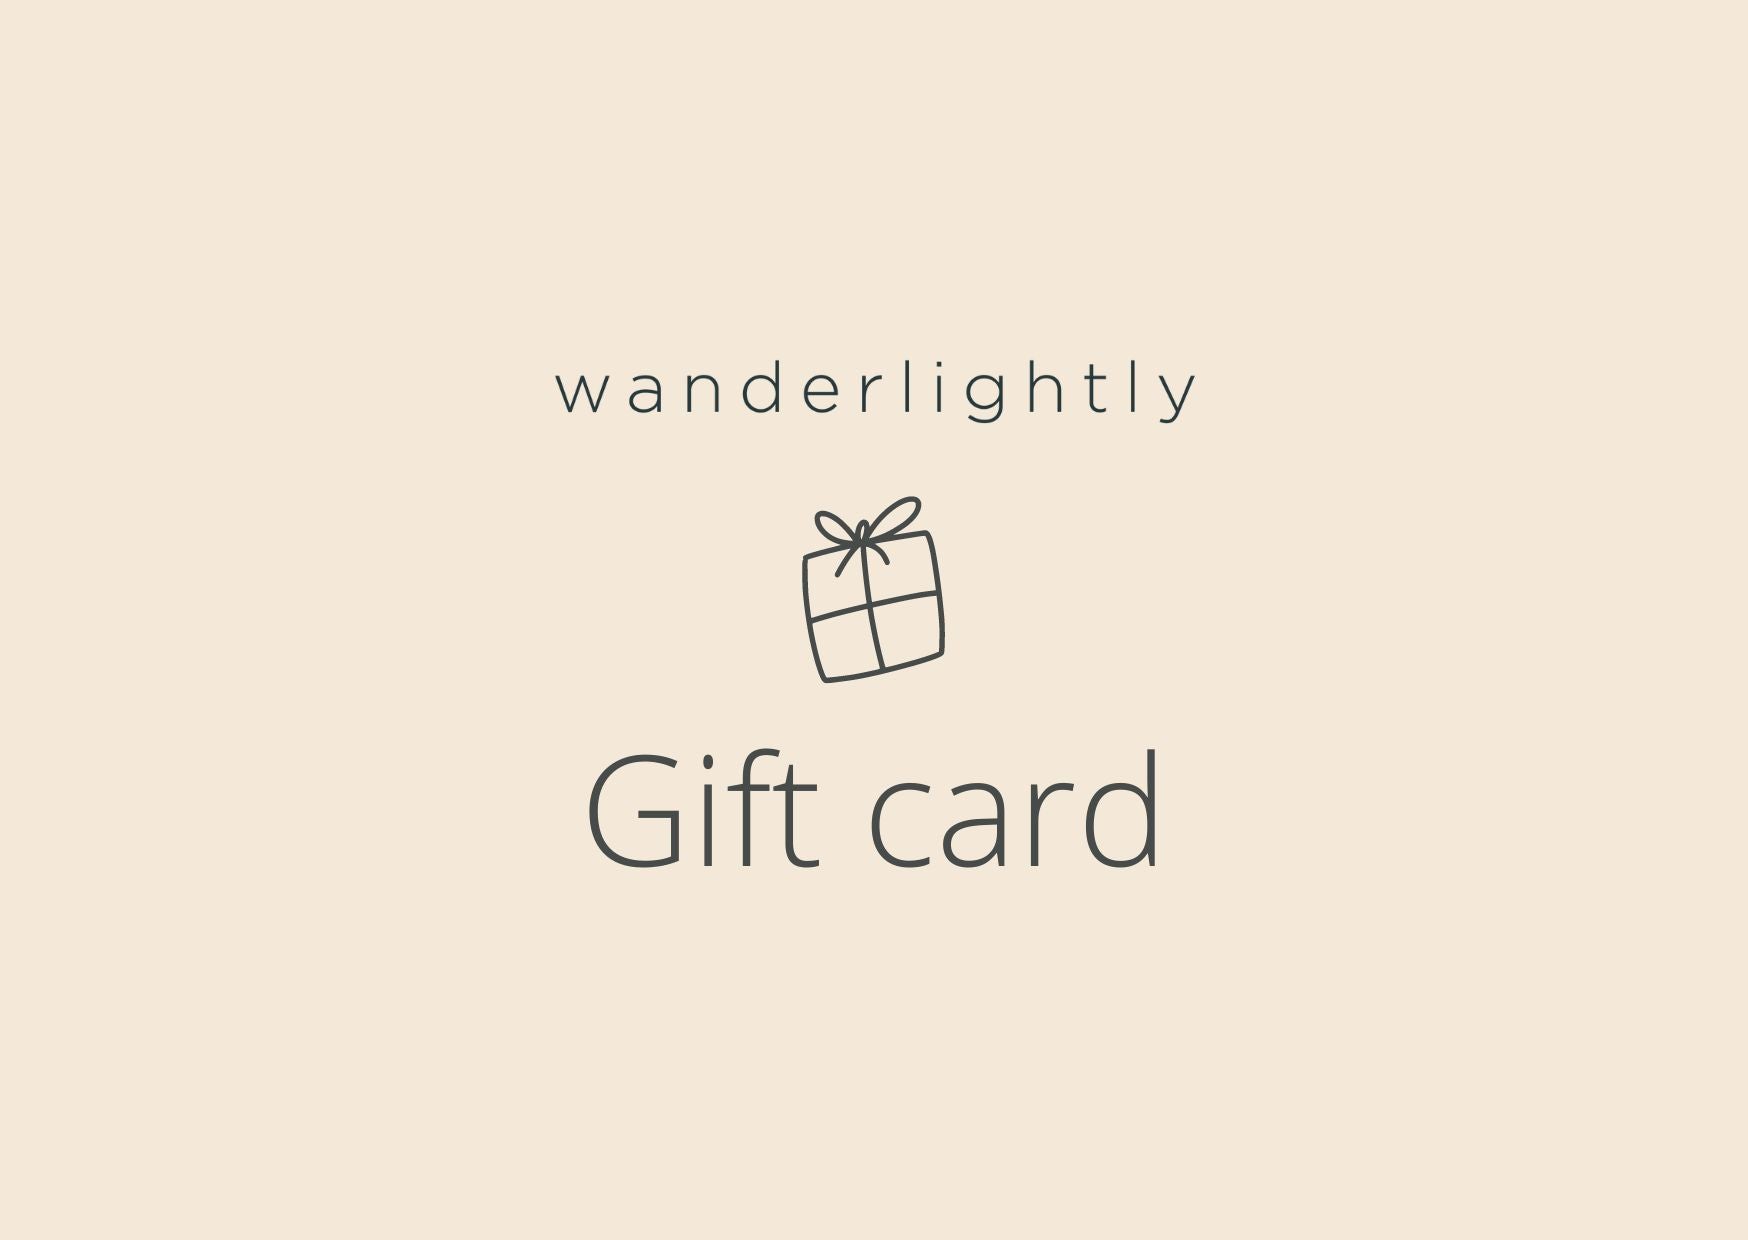 Wanderlightly gift card